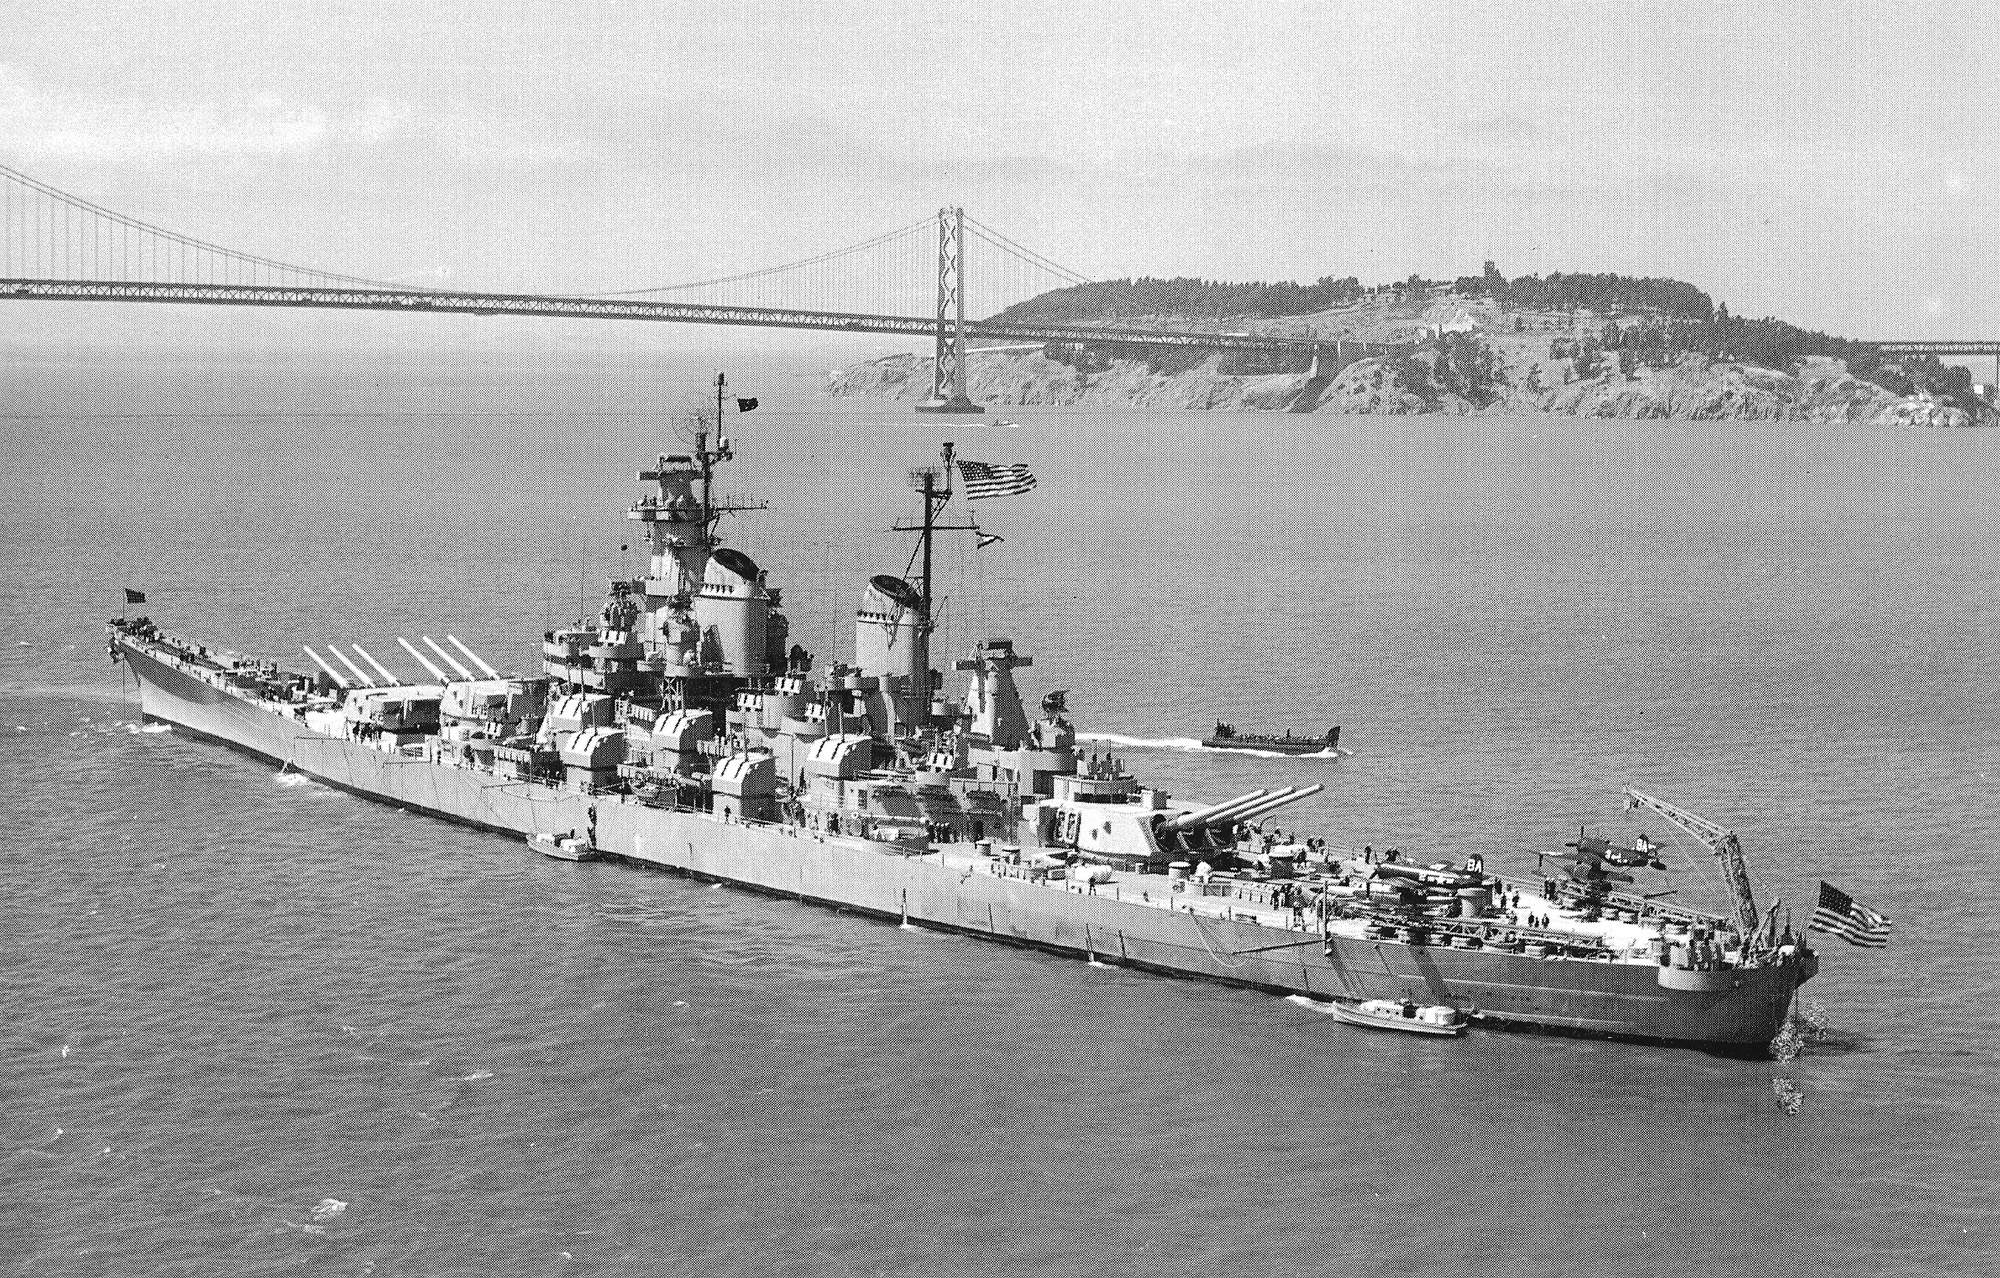 Battleship USS Iowa on display in San Francisco Bay, California, United States, 24 May 1947. Note San Francisco-Oakland Bay Bridge and Yerba Buena Island in the background.